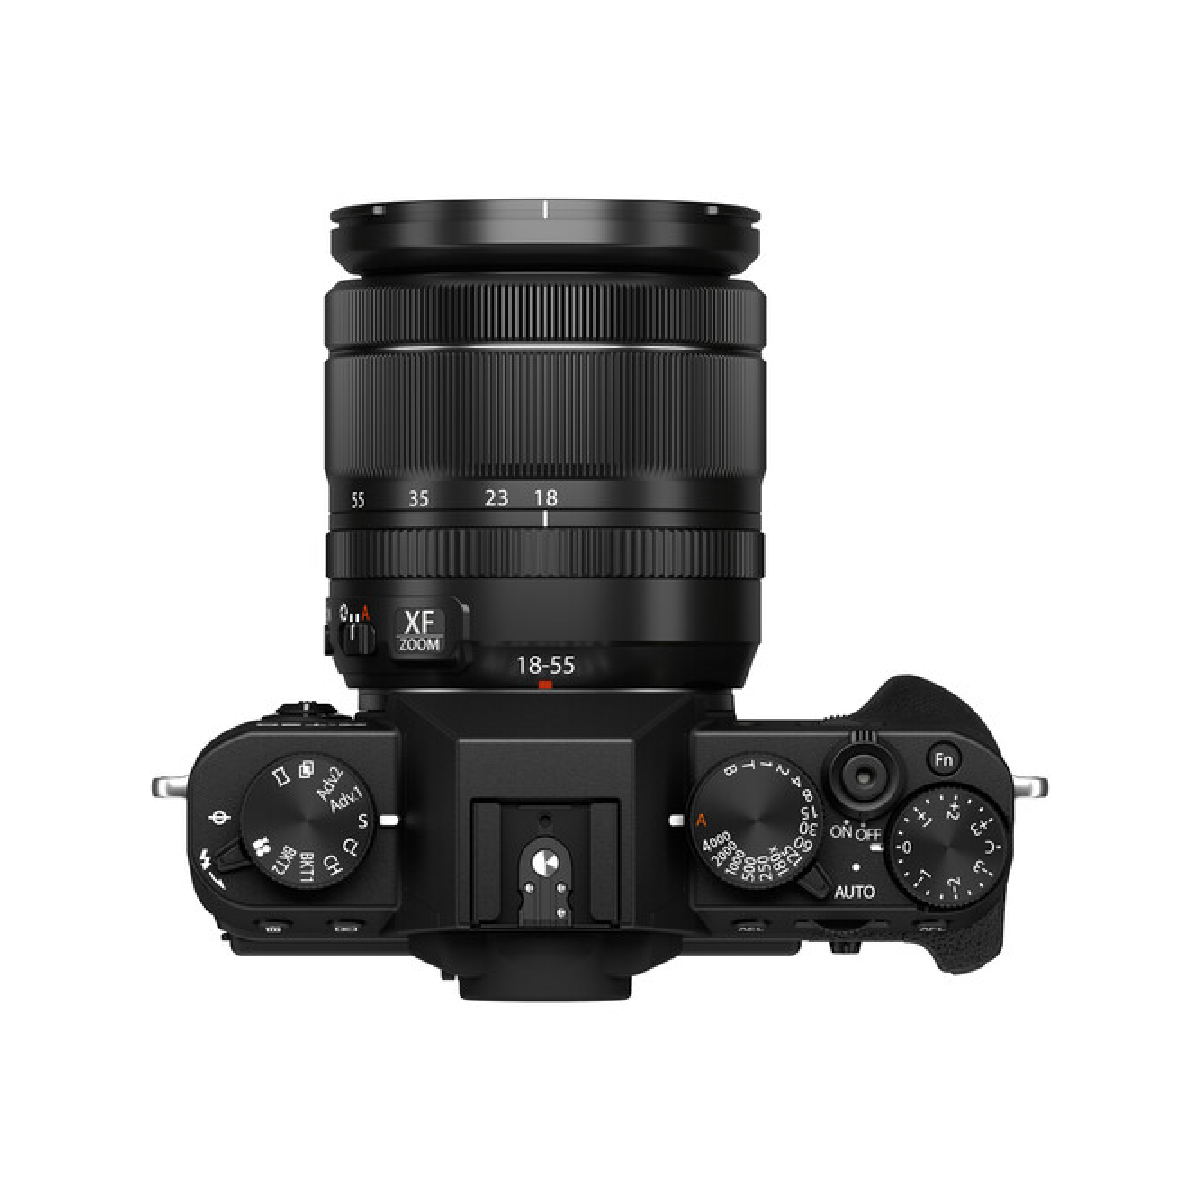 Fujifilm X-T30 II Camera Body With XF18-55mm Lens – Black (9)